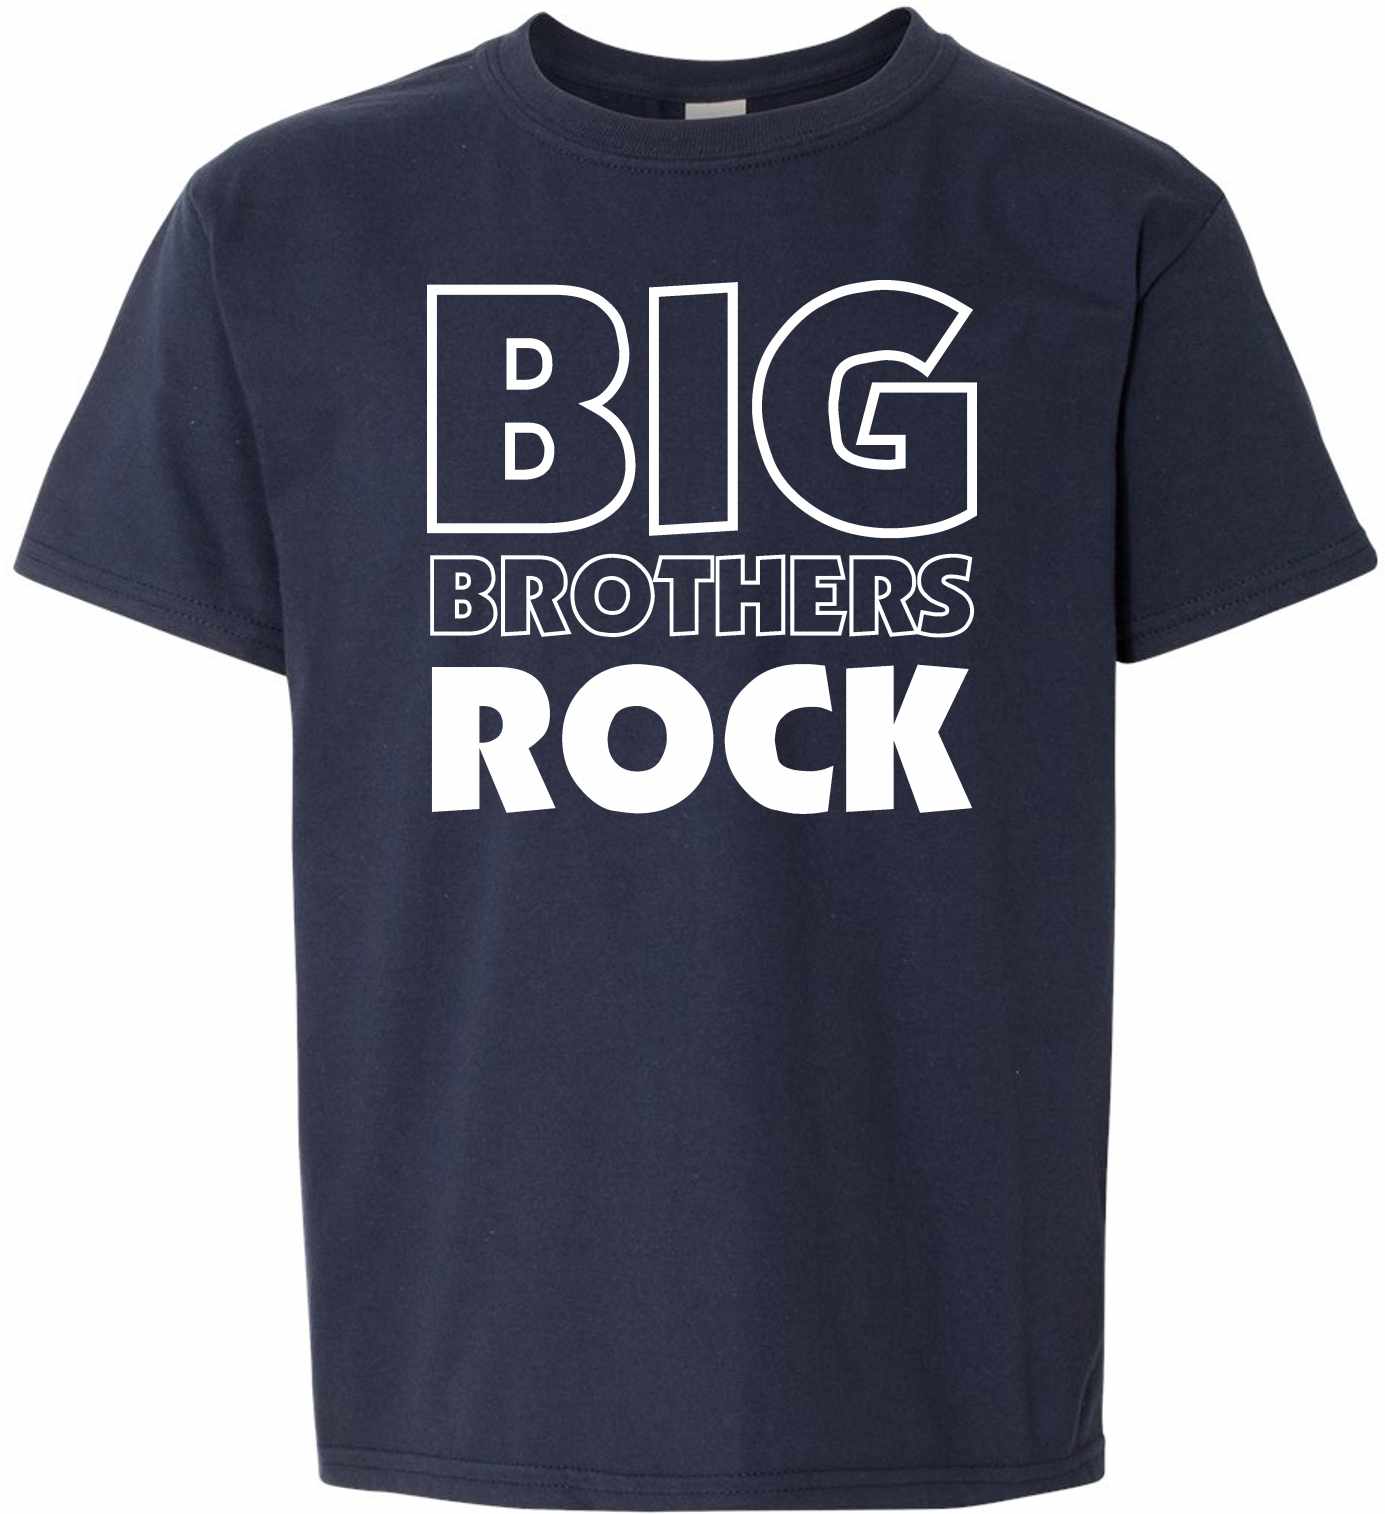 Big Brothers Rock on Kids T-Shirt (#1102-201)